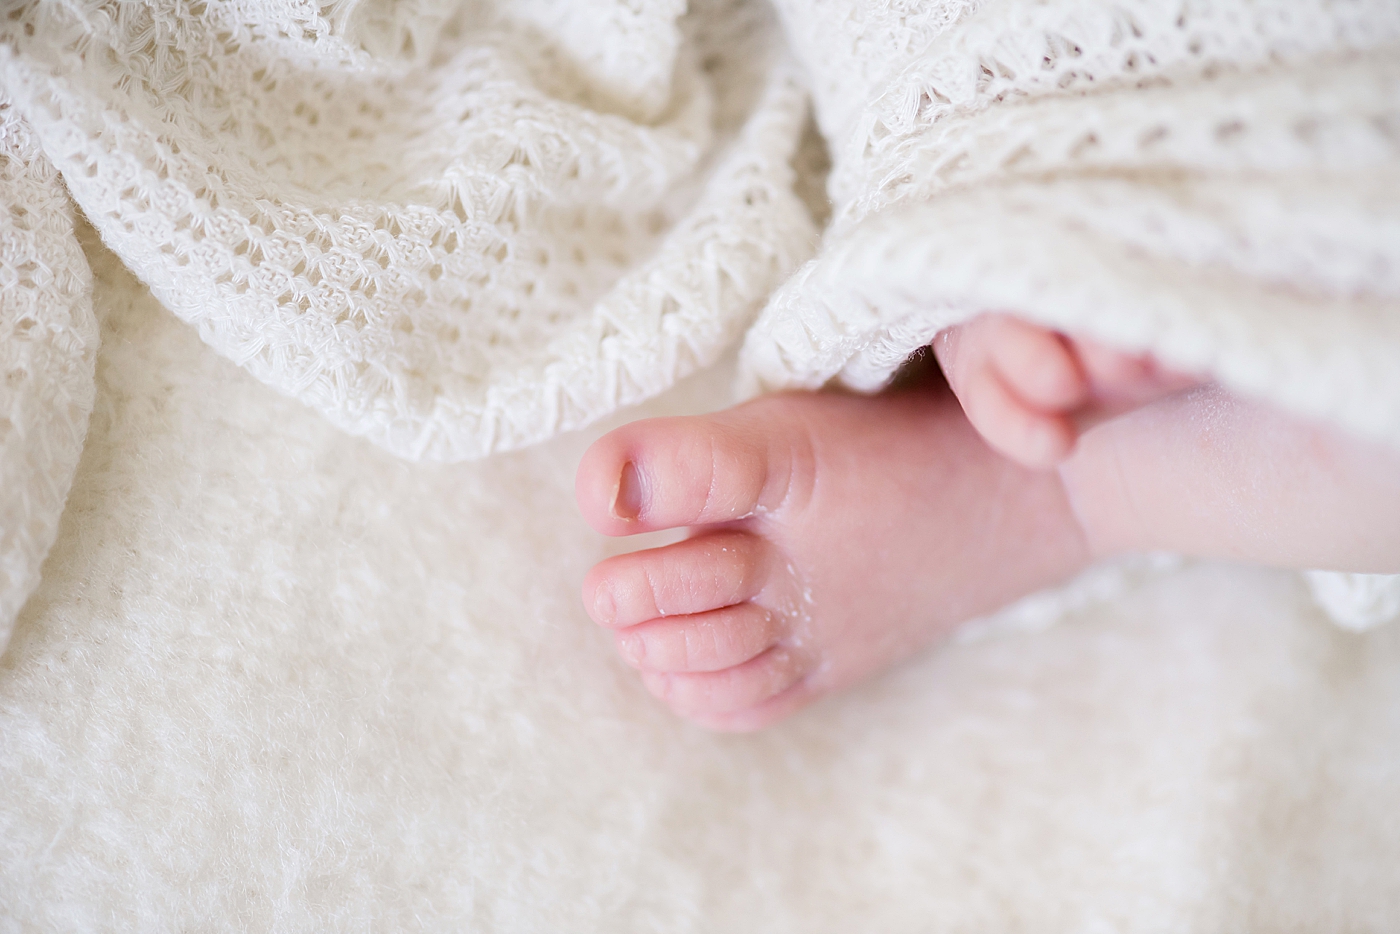 Newborn baby feet and white blanket | Photo by Anna Wisjo